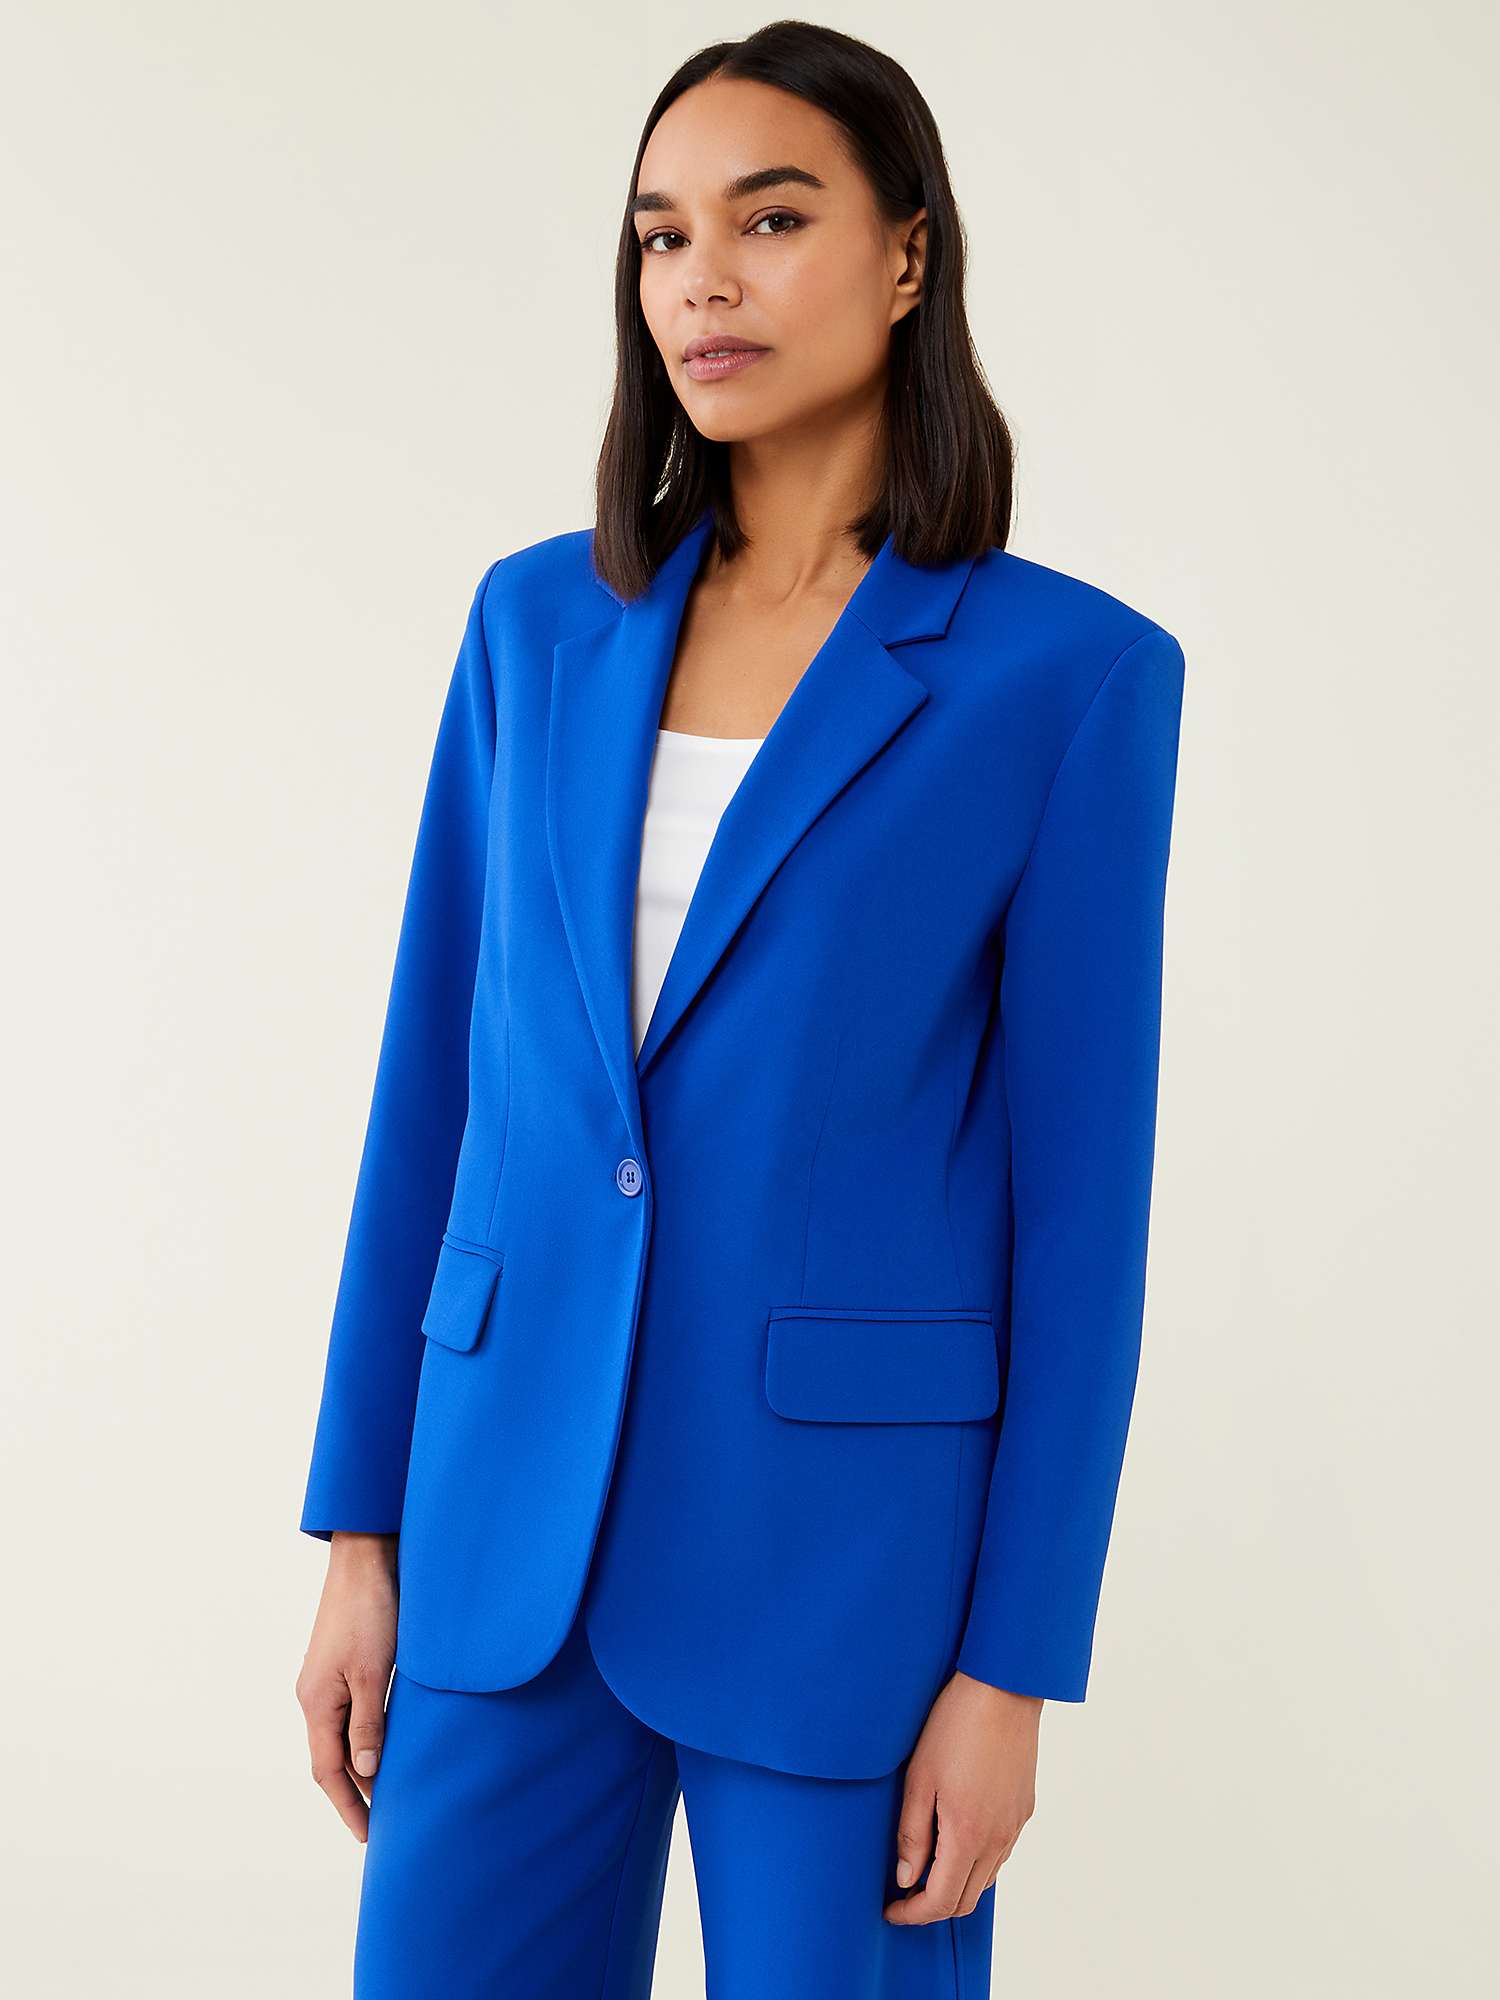 Finery Kaiya Single Breasted Jacket, Cobalt Blue at John Lewis & Partners